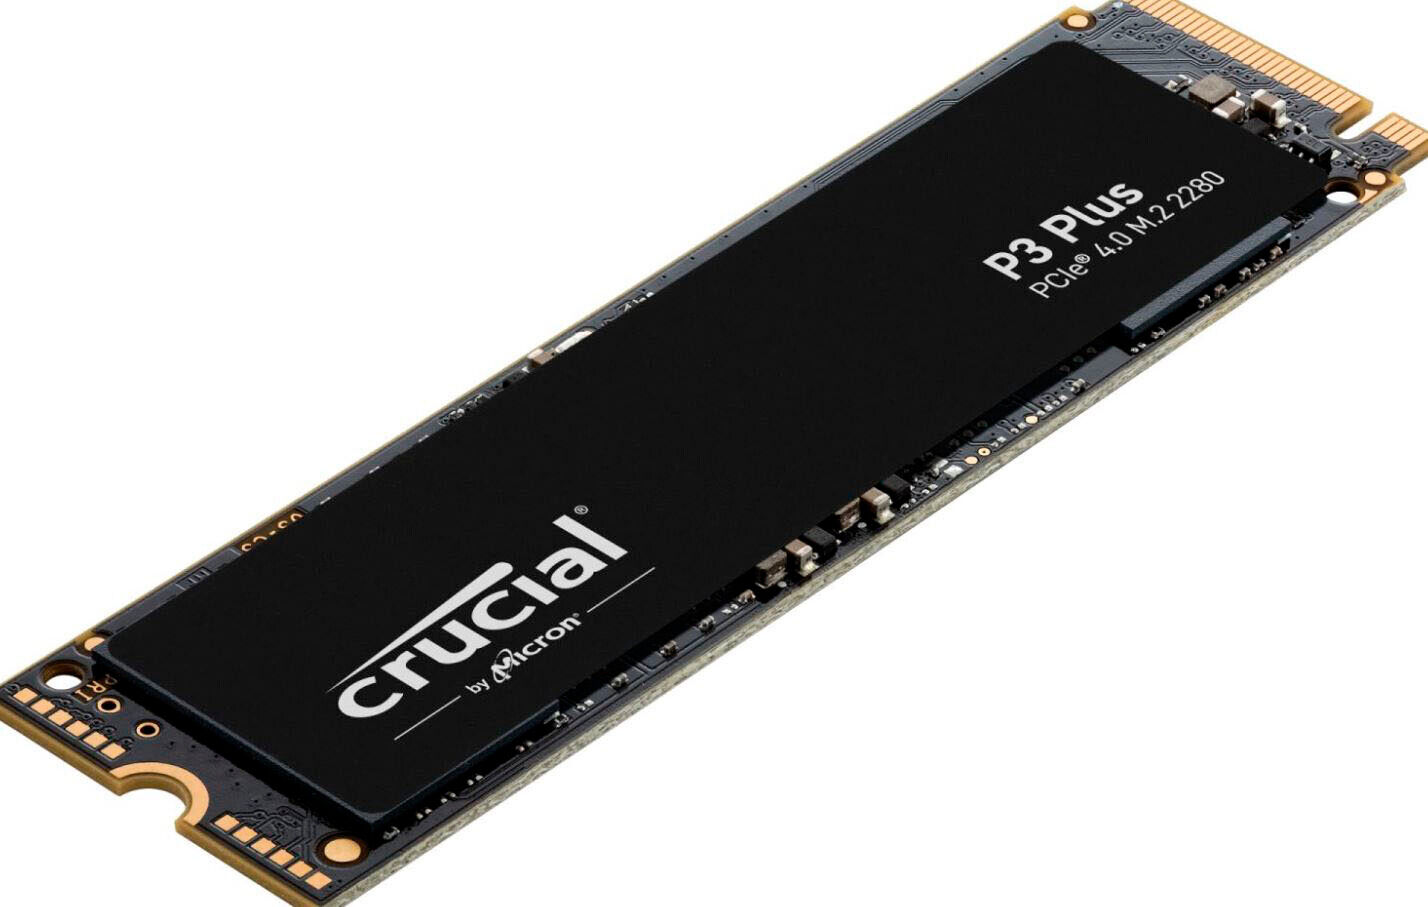 Crucial - P3 500GB Internal SSD PCIe Gen 3 x4 NVMe